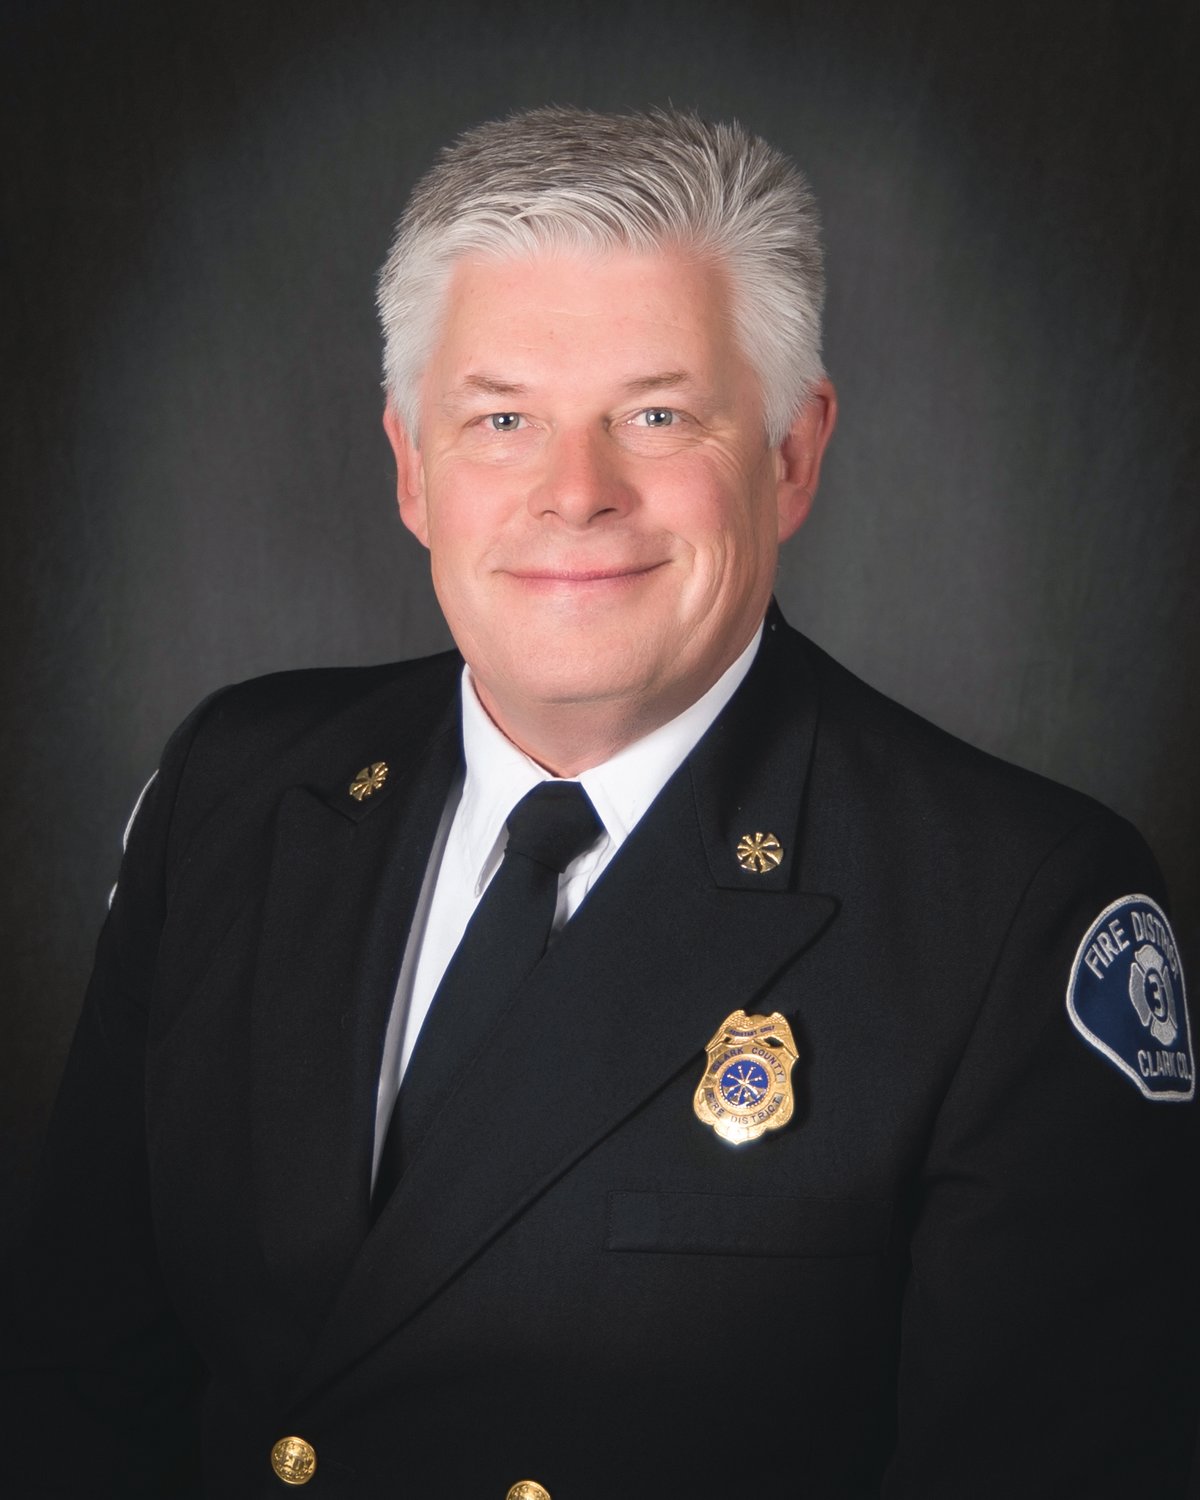 Scott Sorenson, fire chief of Clark County Fire District 3